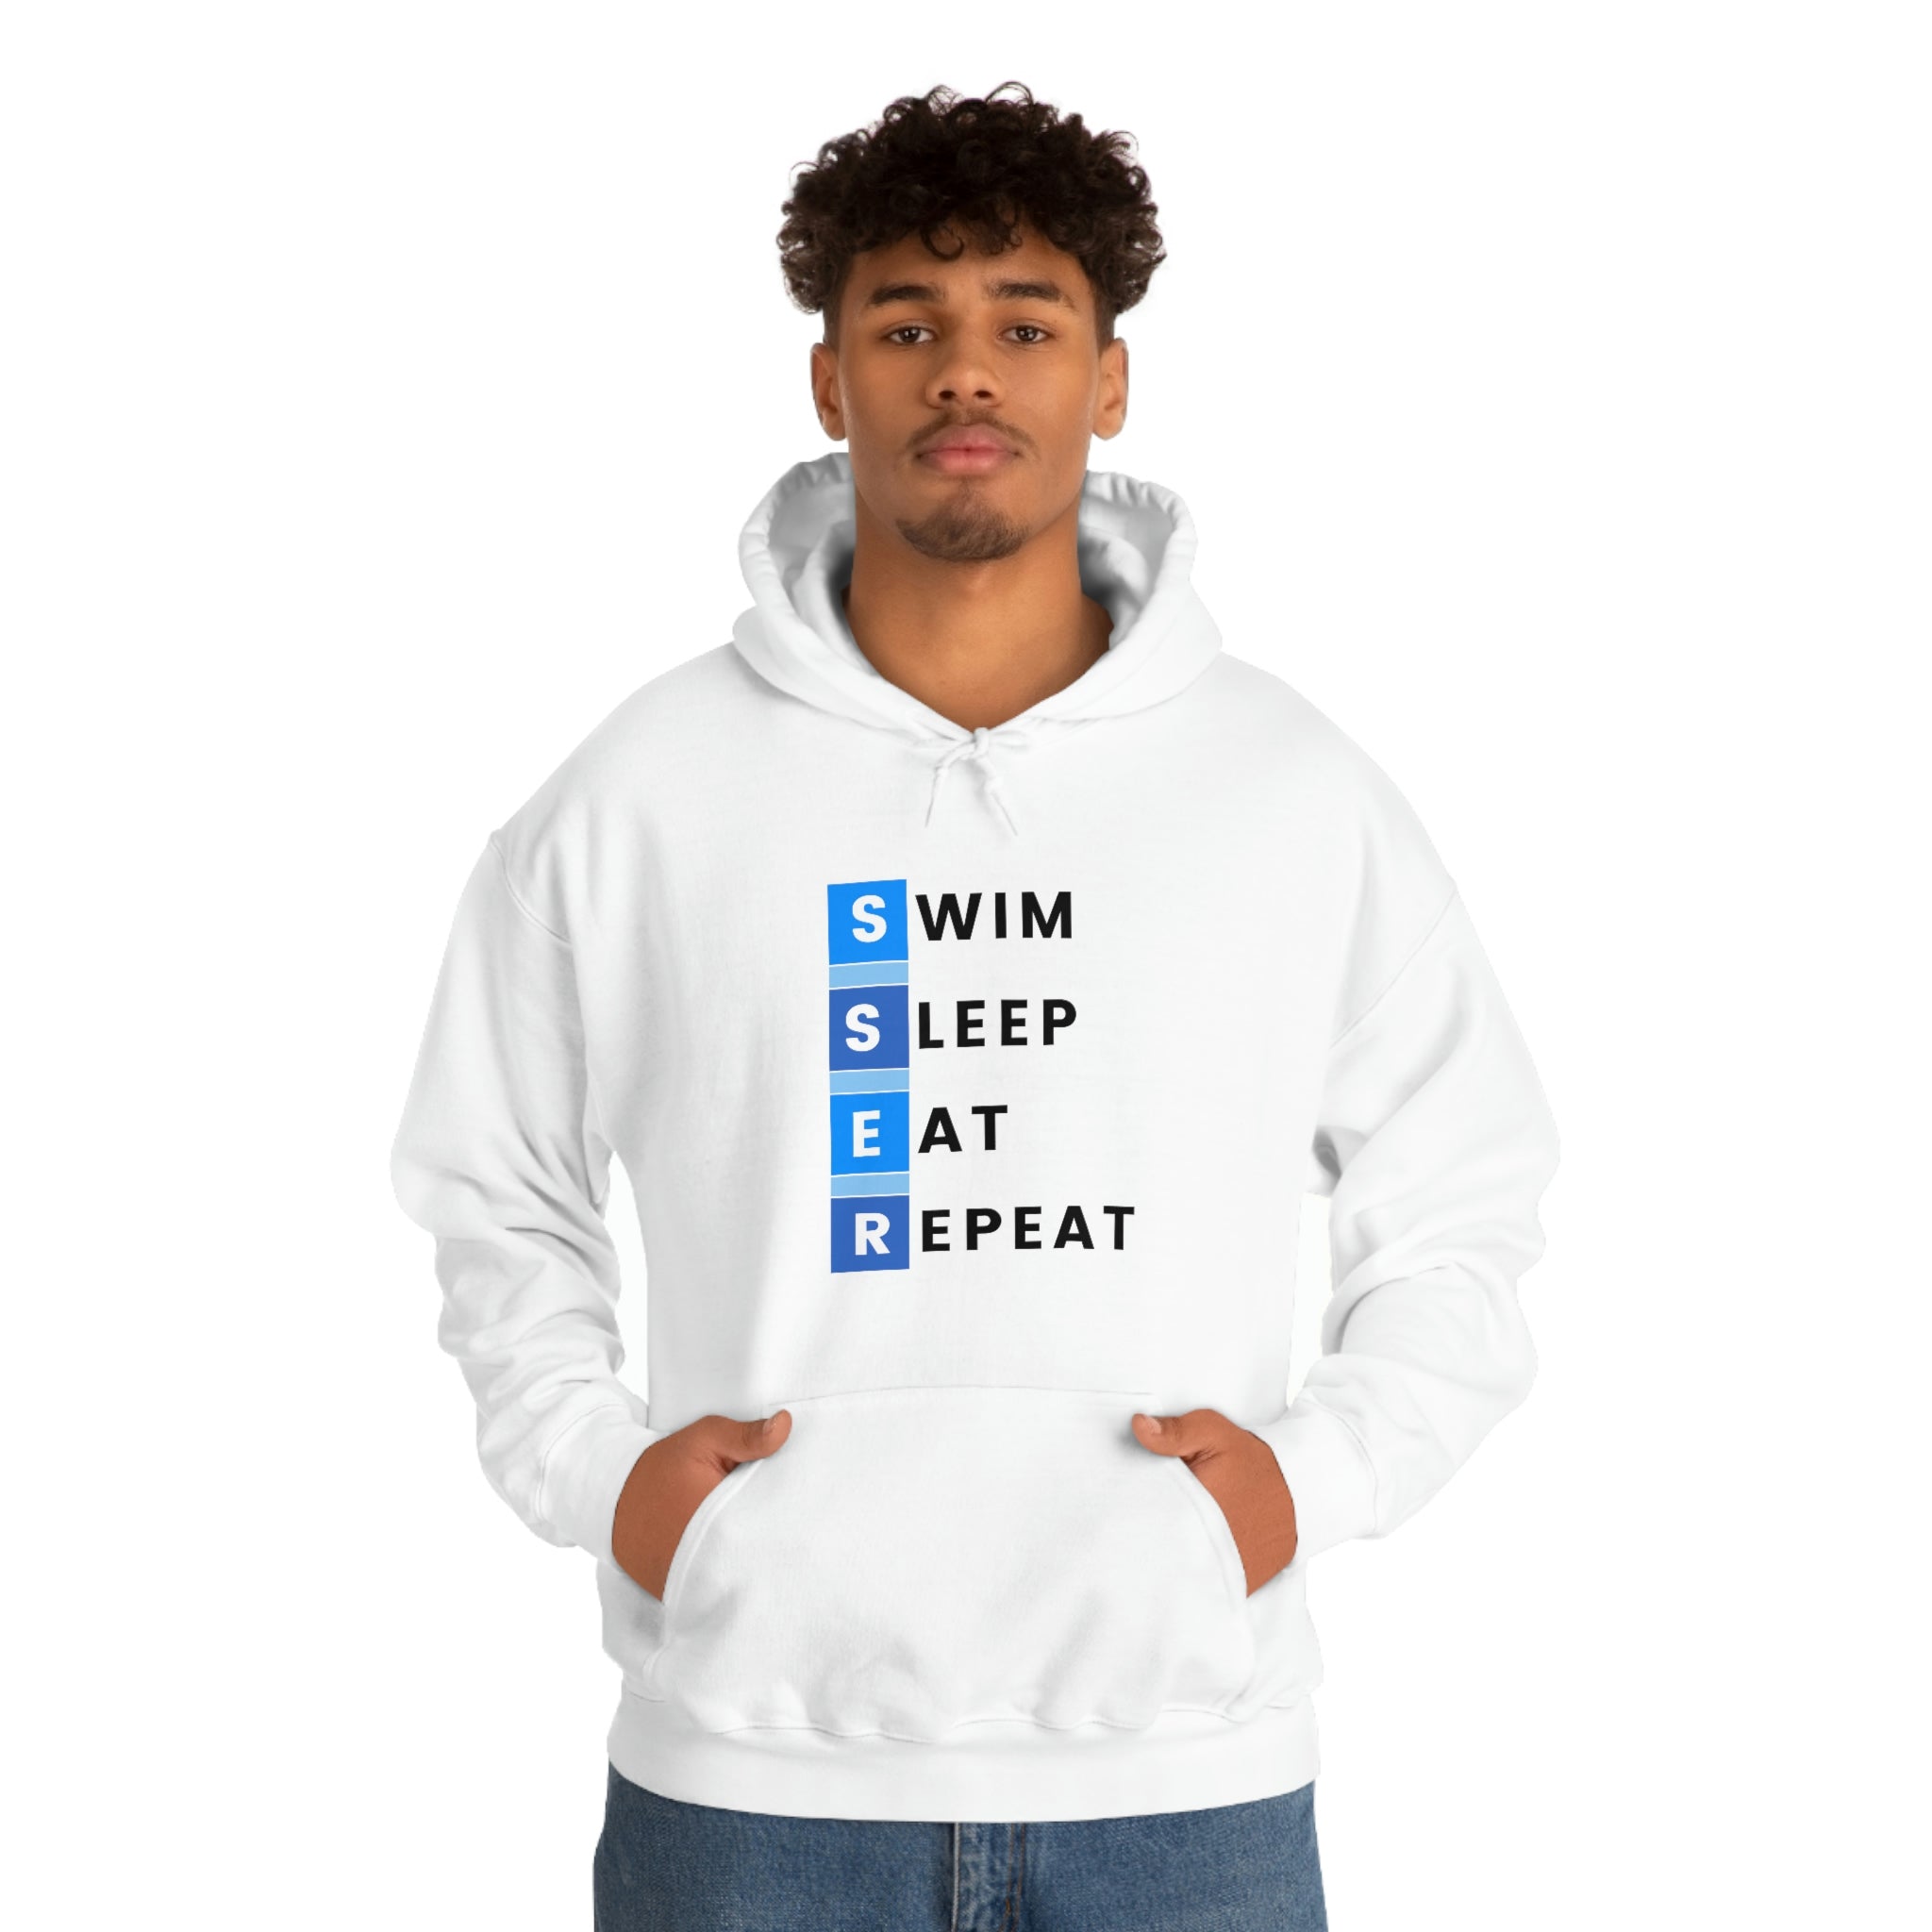 Swim, Sleep, Eat, Repeat Hooded Sweatshirt